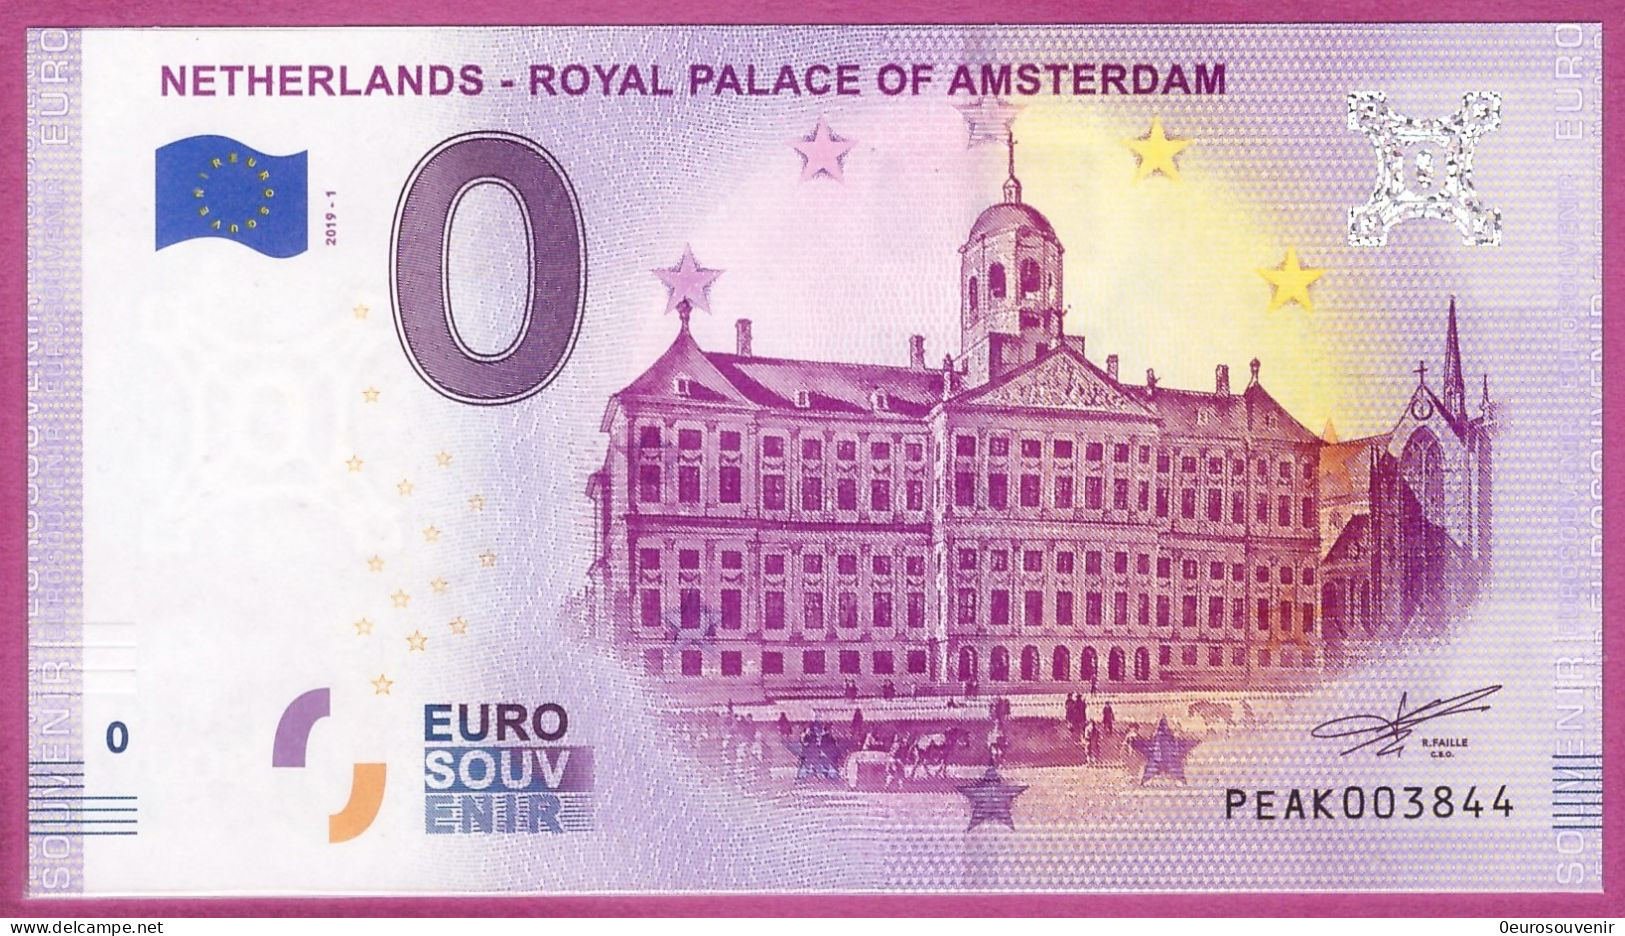 0-Euro PEAK 2019-1  NETHERLANDS - ROYAL PALACE OF AMSTERDAM - Privatentwürfe